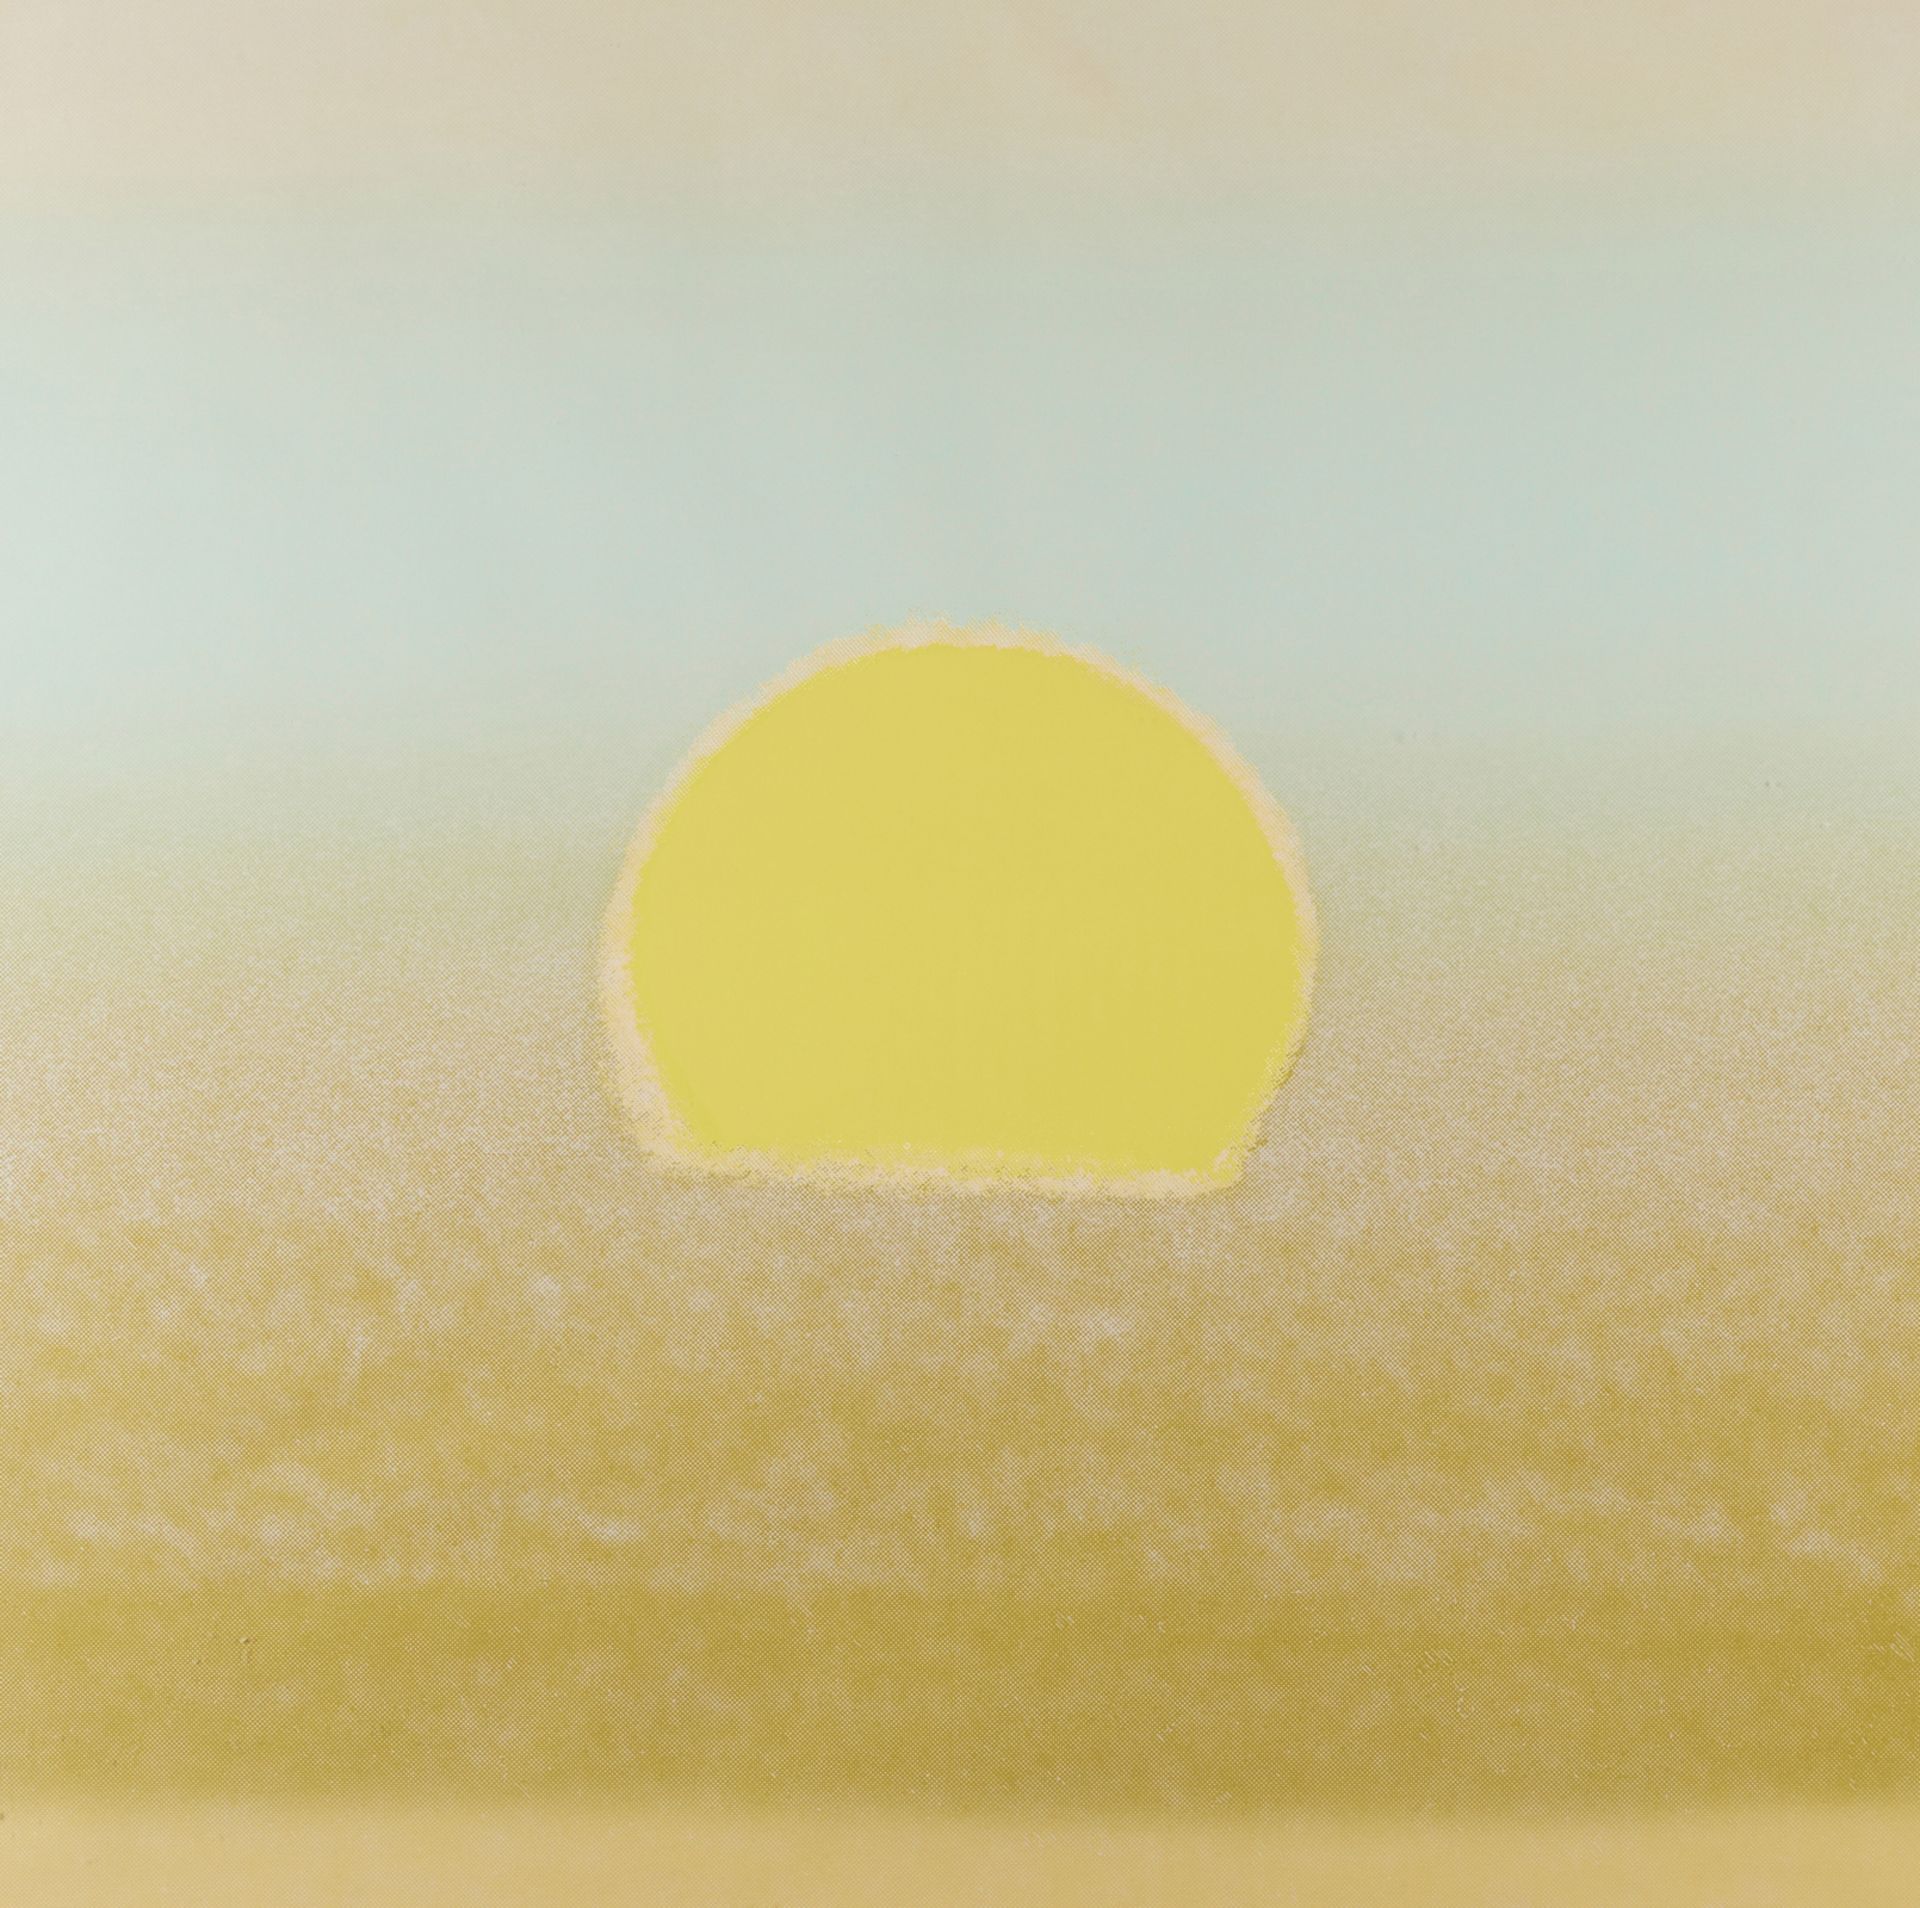 Andy Warhol "Sunset" Screenprint 1972